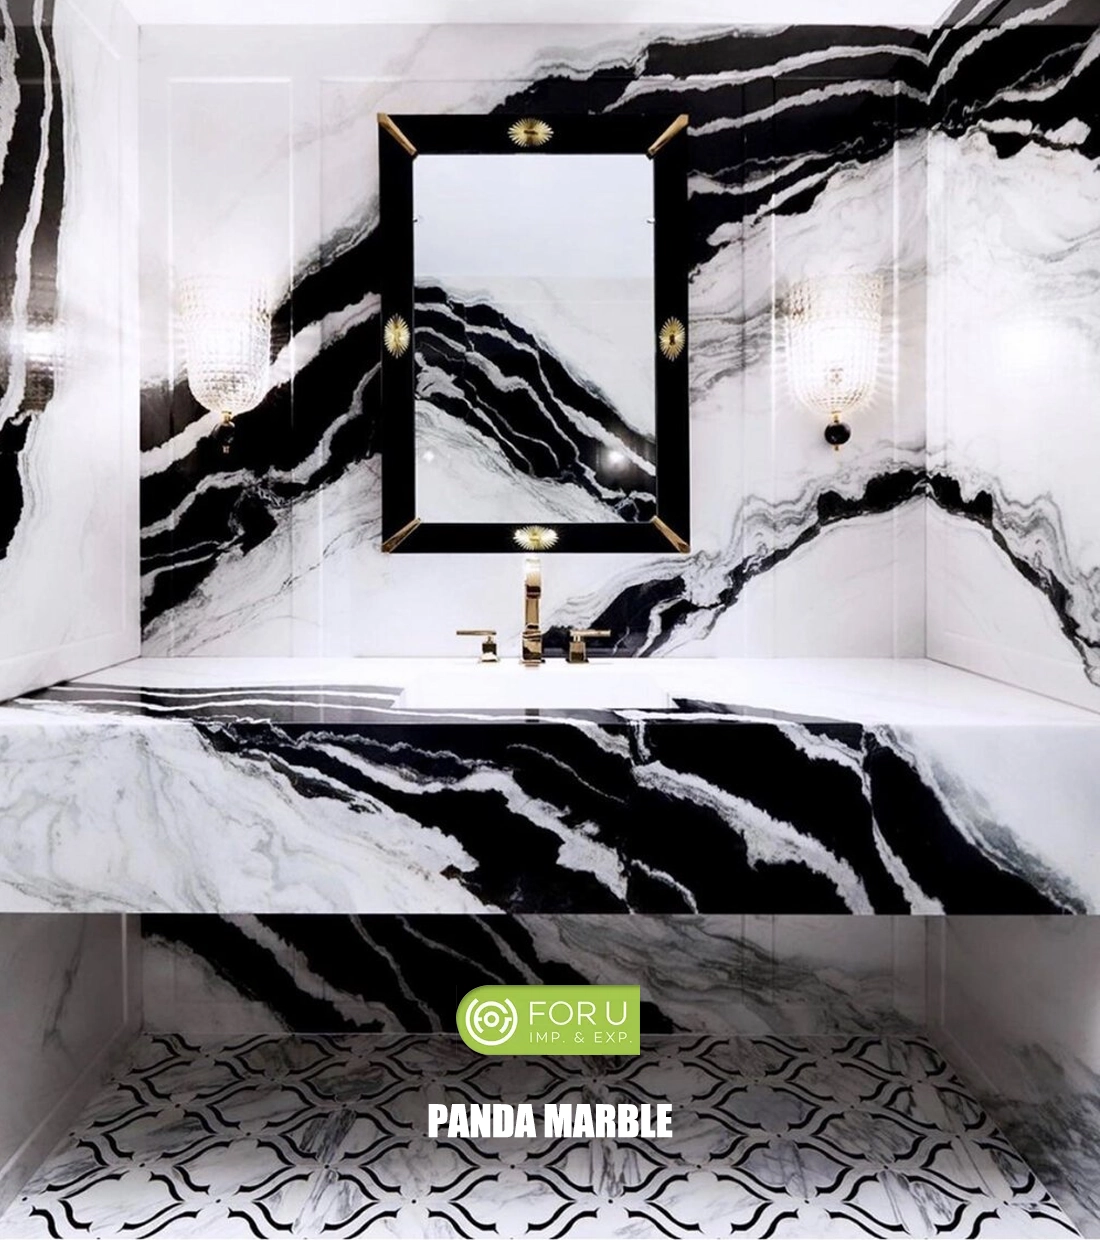 Panda Marble Bathroom Countertops Projects